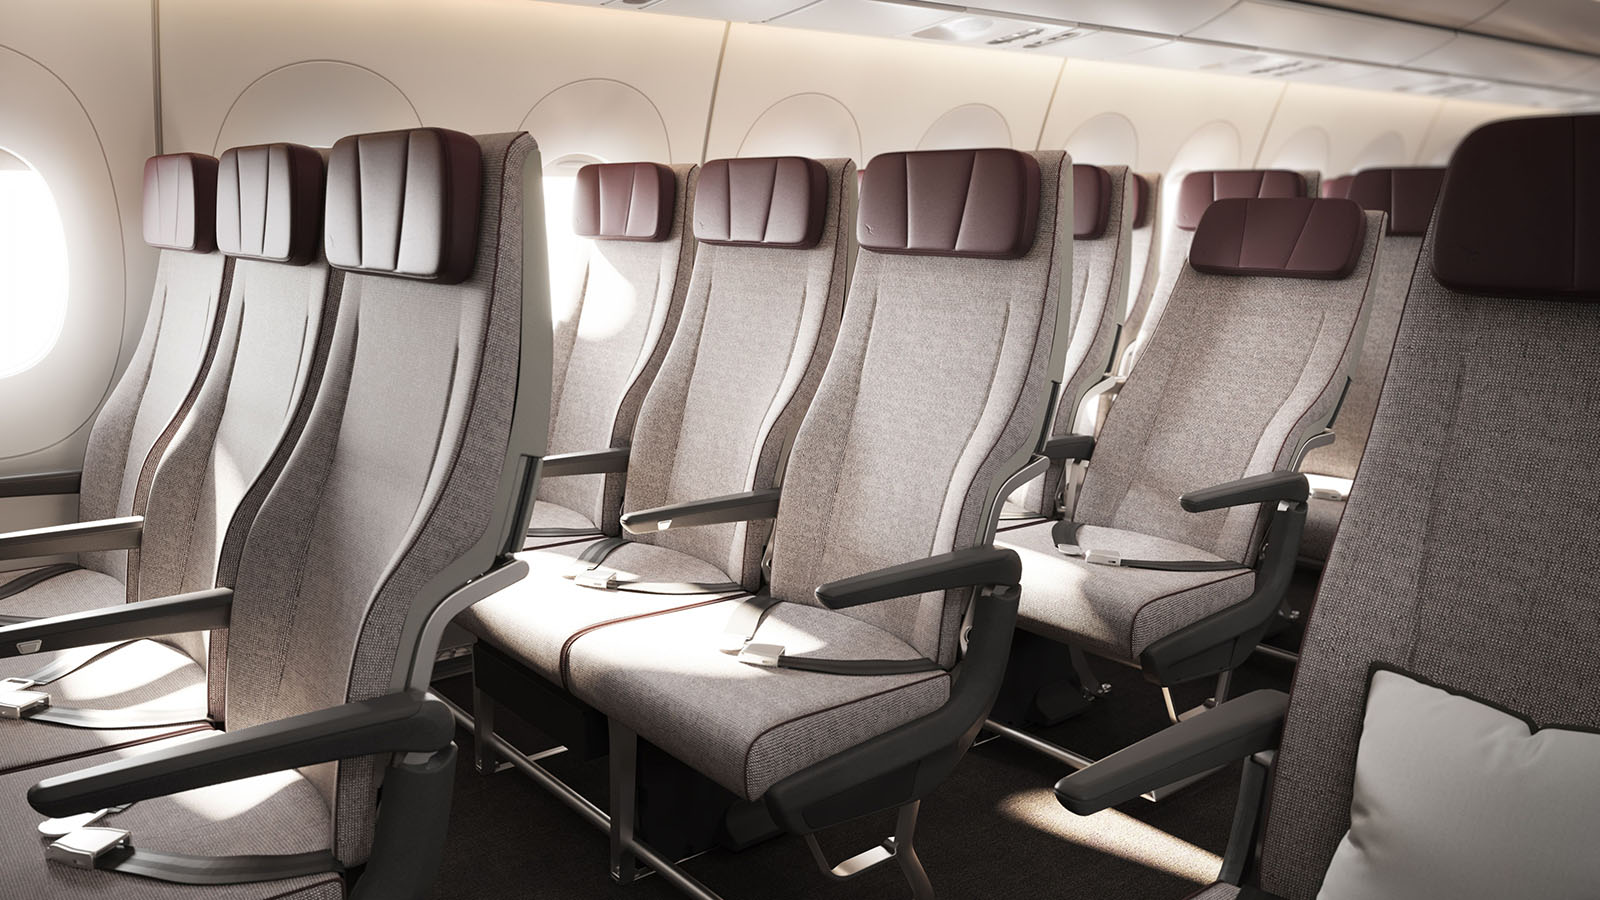 Customisation of Qantas' Project Sunrise Economy seat